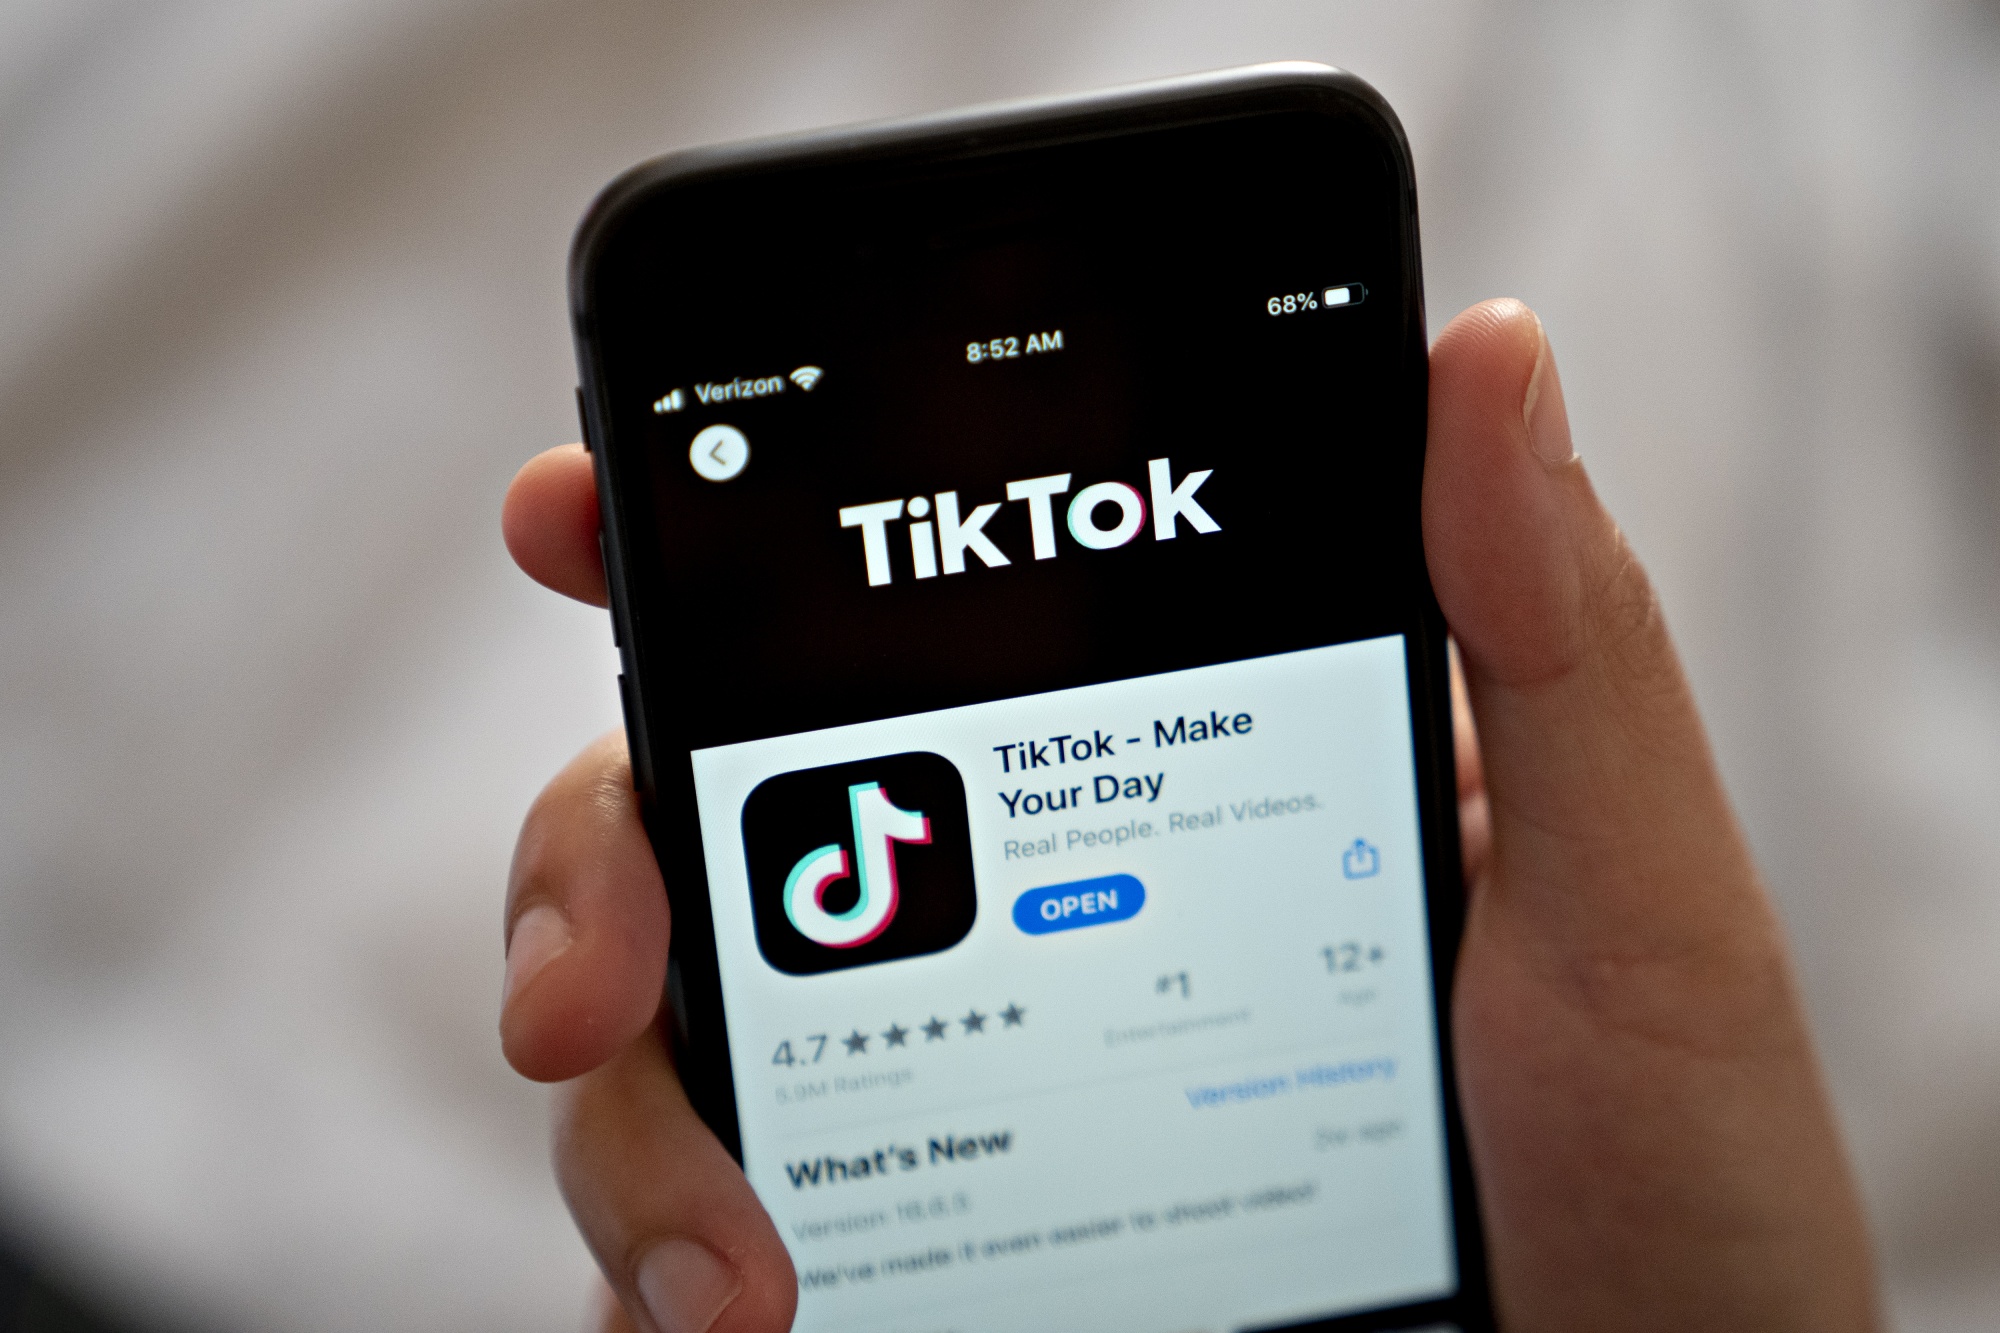 TikTok needs to be sold or risk nationwide ban, Biden